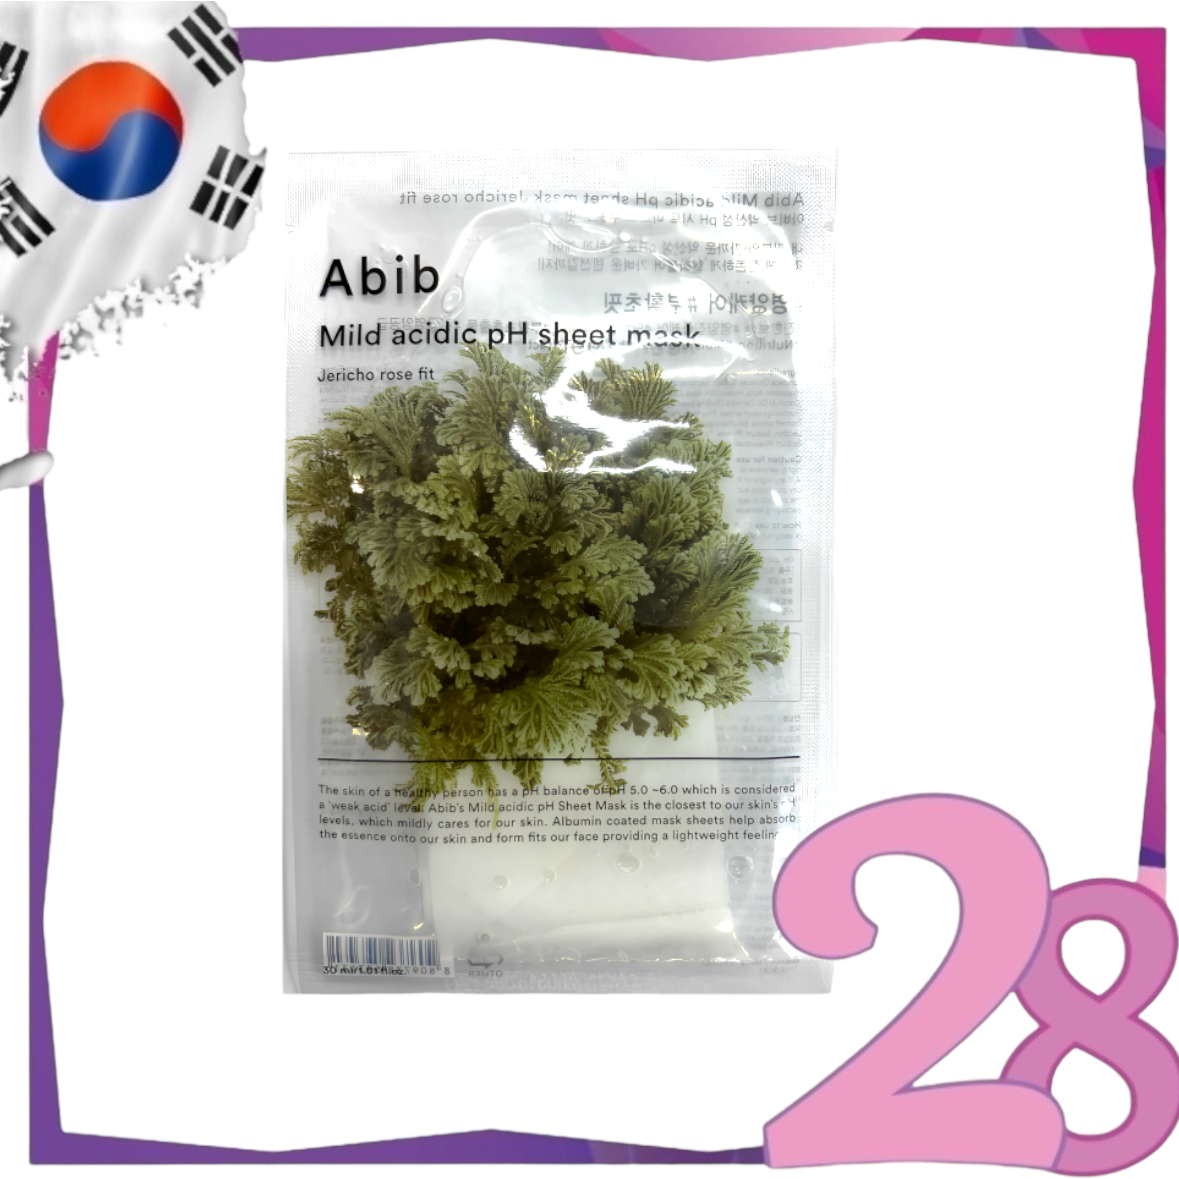 Abib -*10pcs-Mild Acidic pH Sheet Mask Jericho Rose Fit(8809738593448)[Parallel Import]